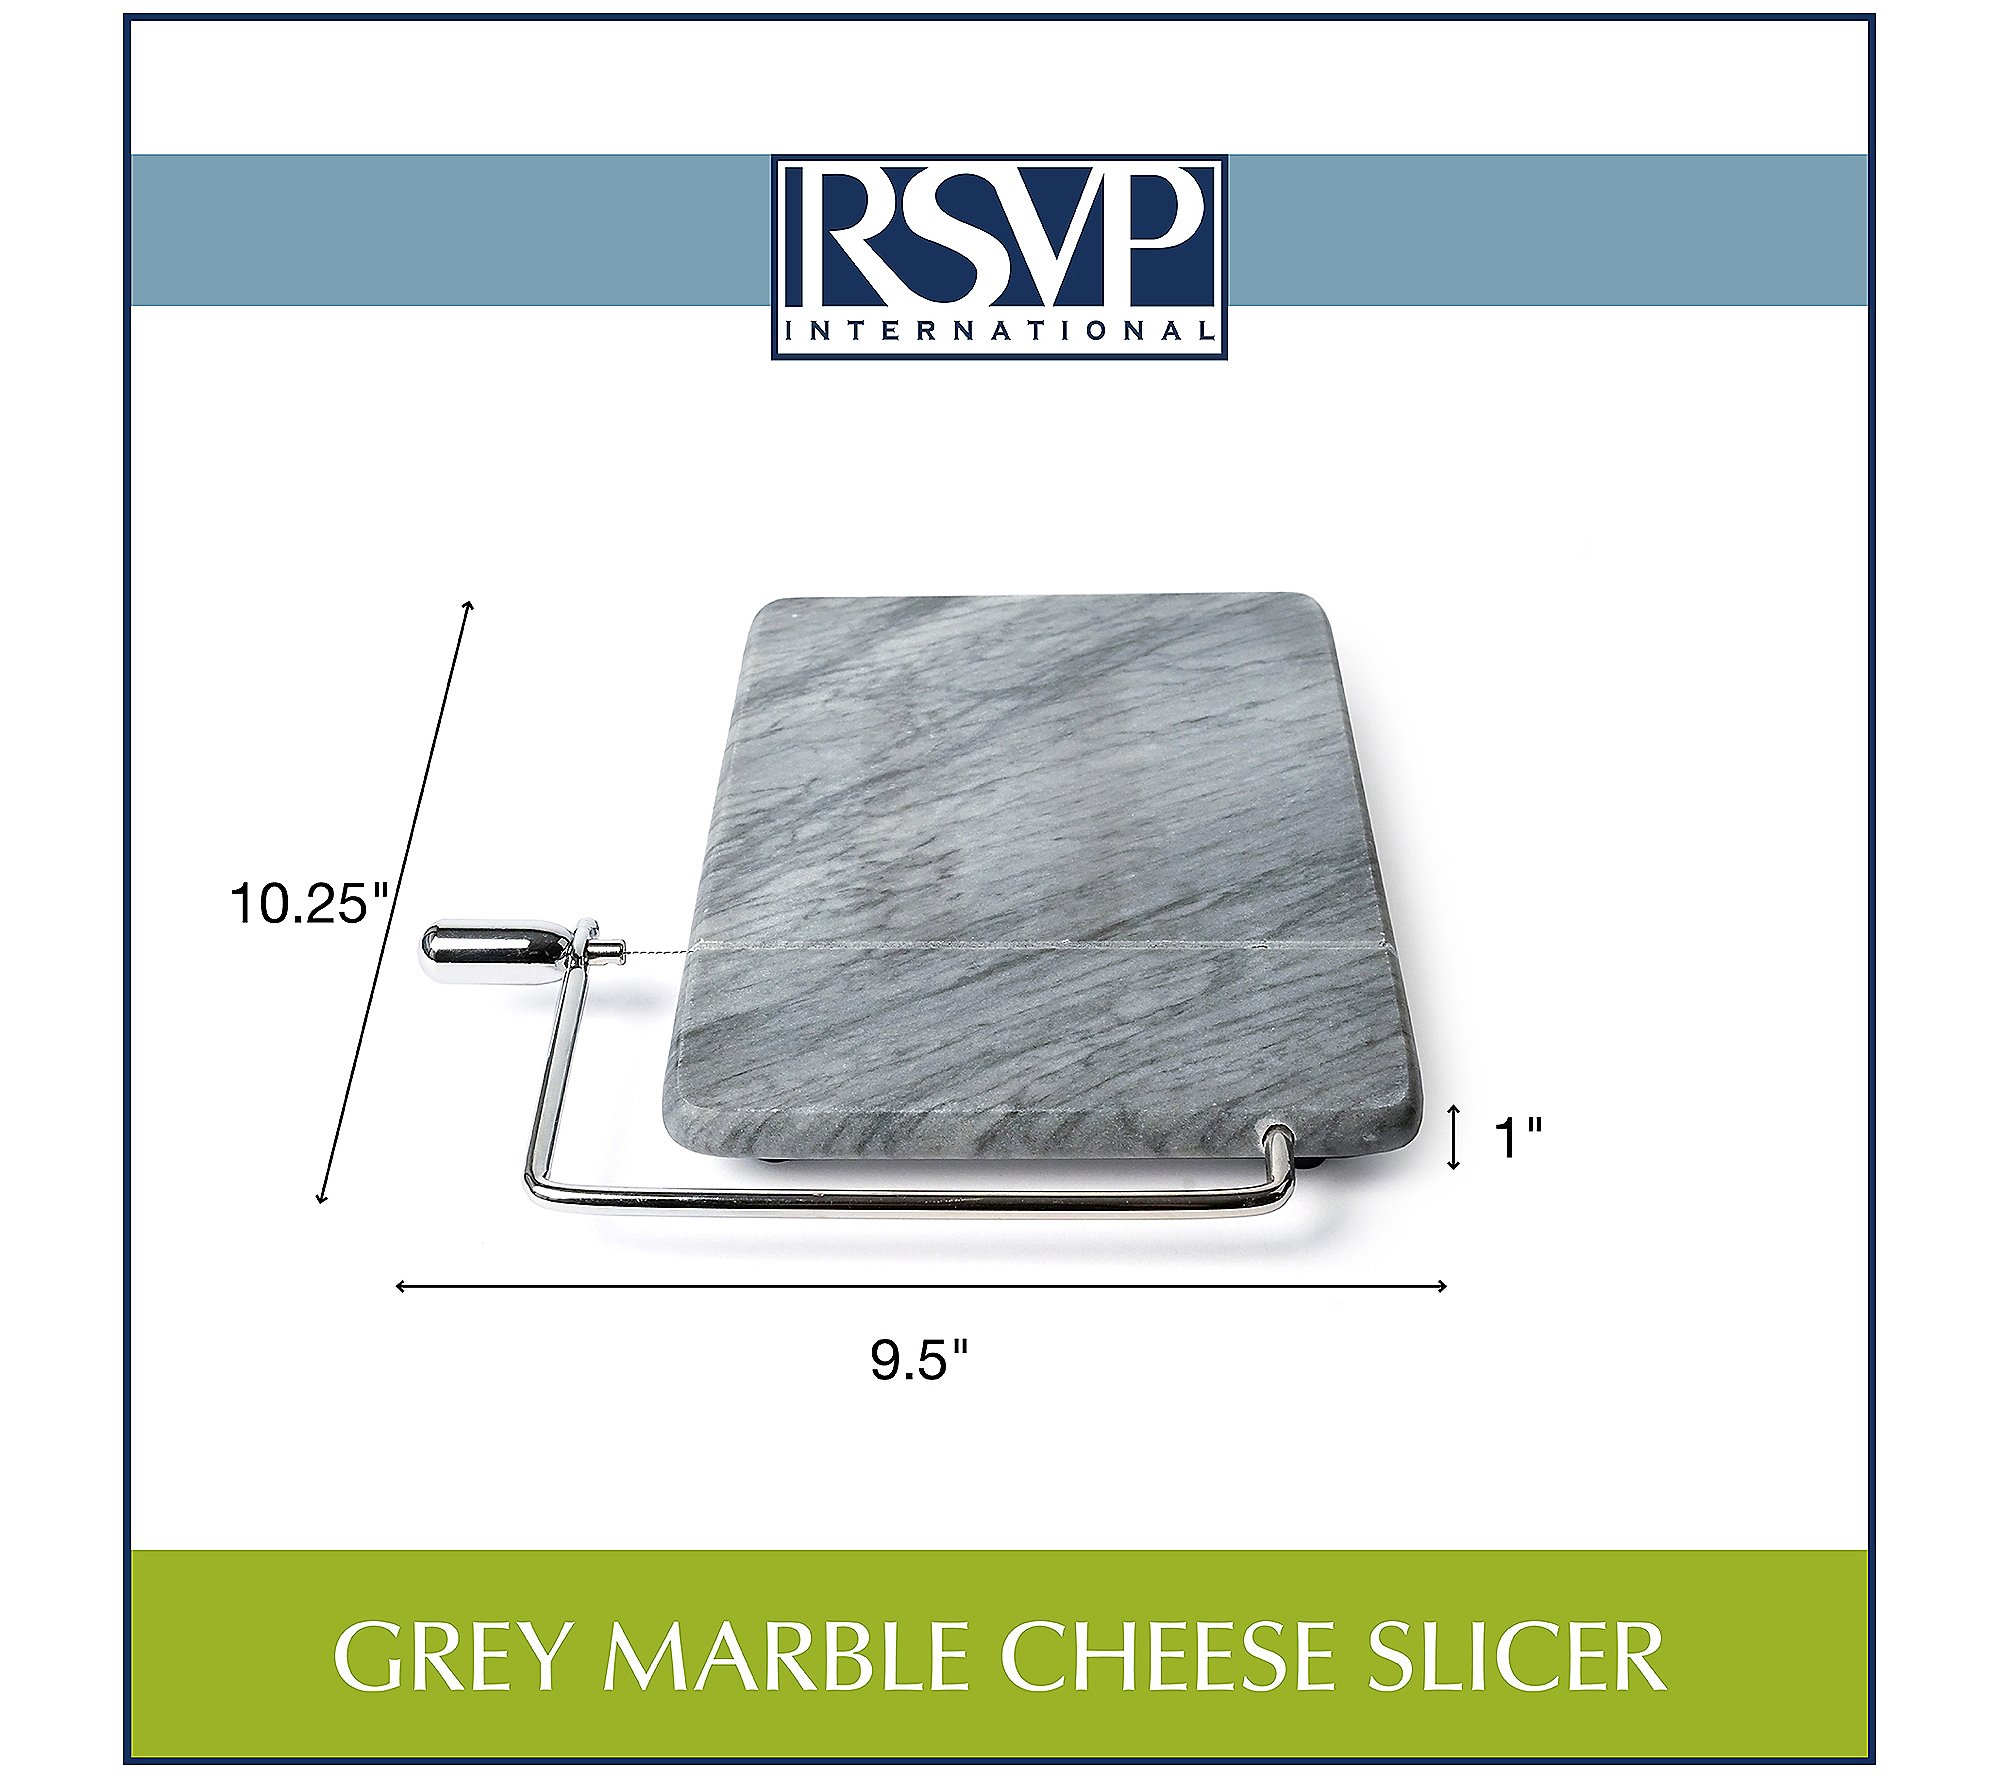 RSVP Grey Marble Cheese Slicer